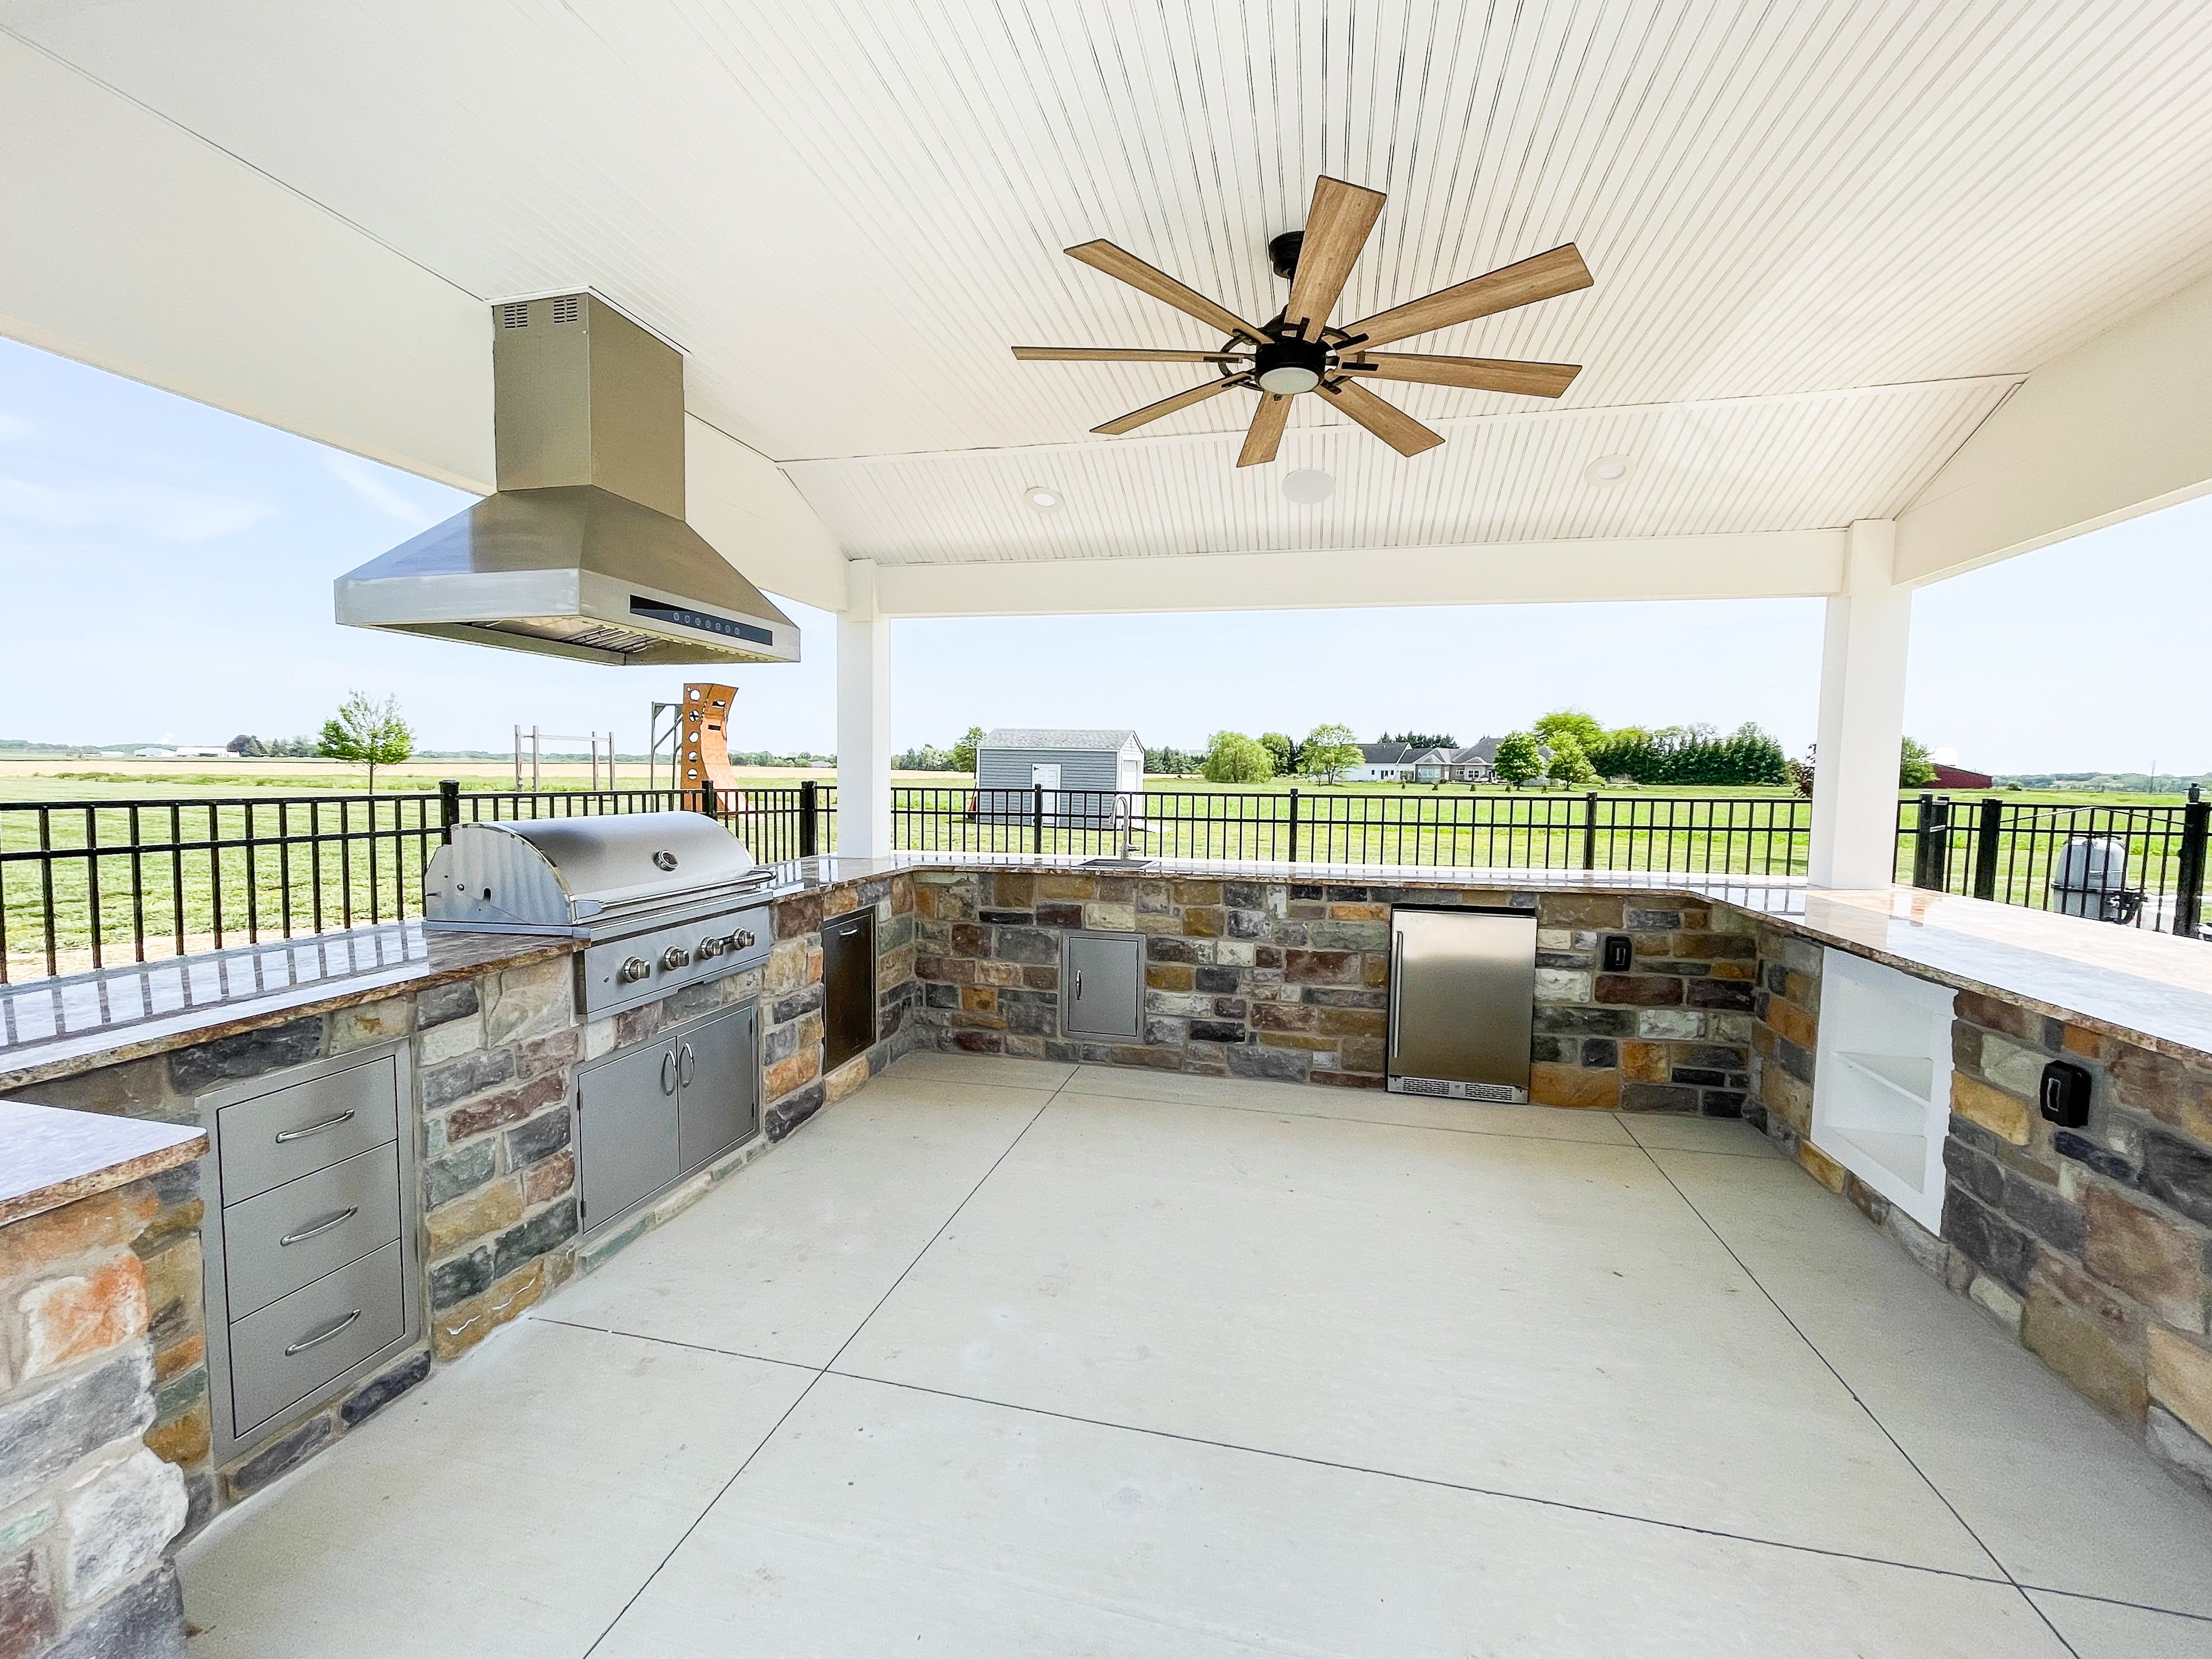 big outdoor kitchen with a proline outdoor range hood